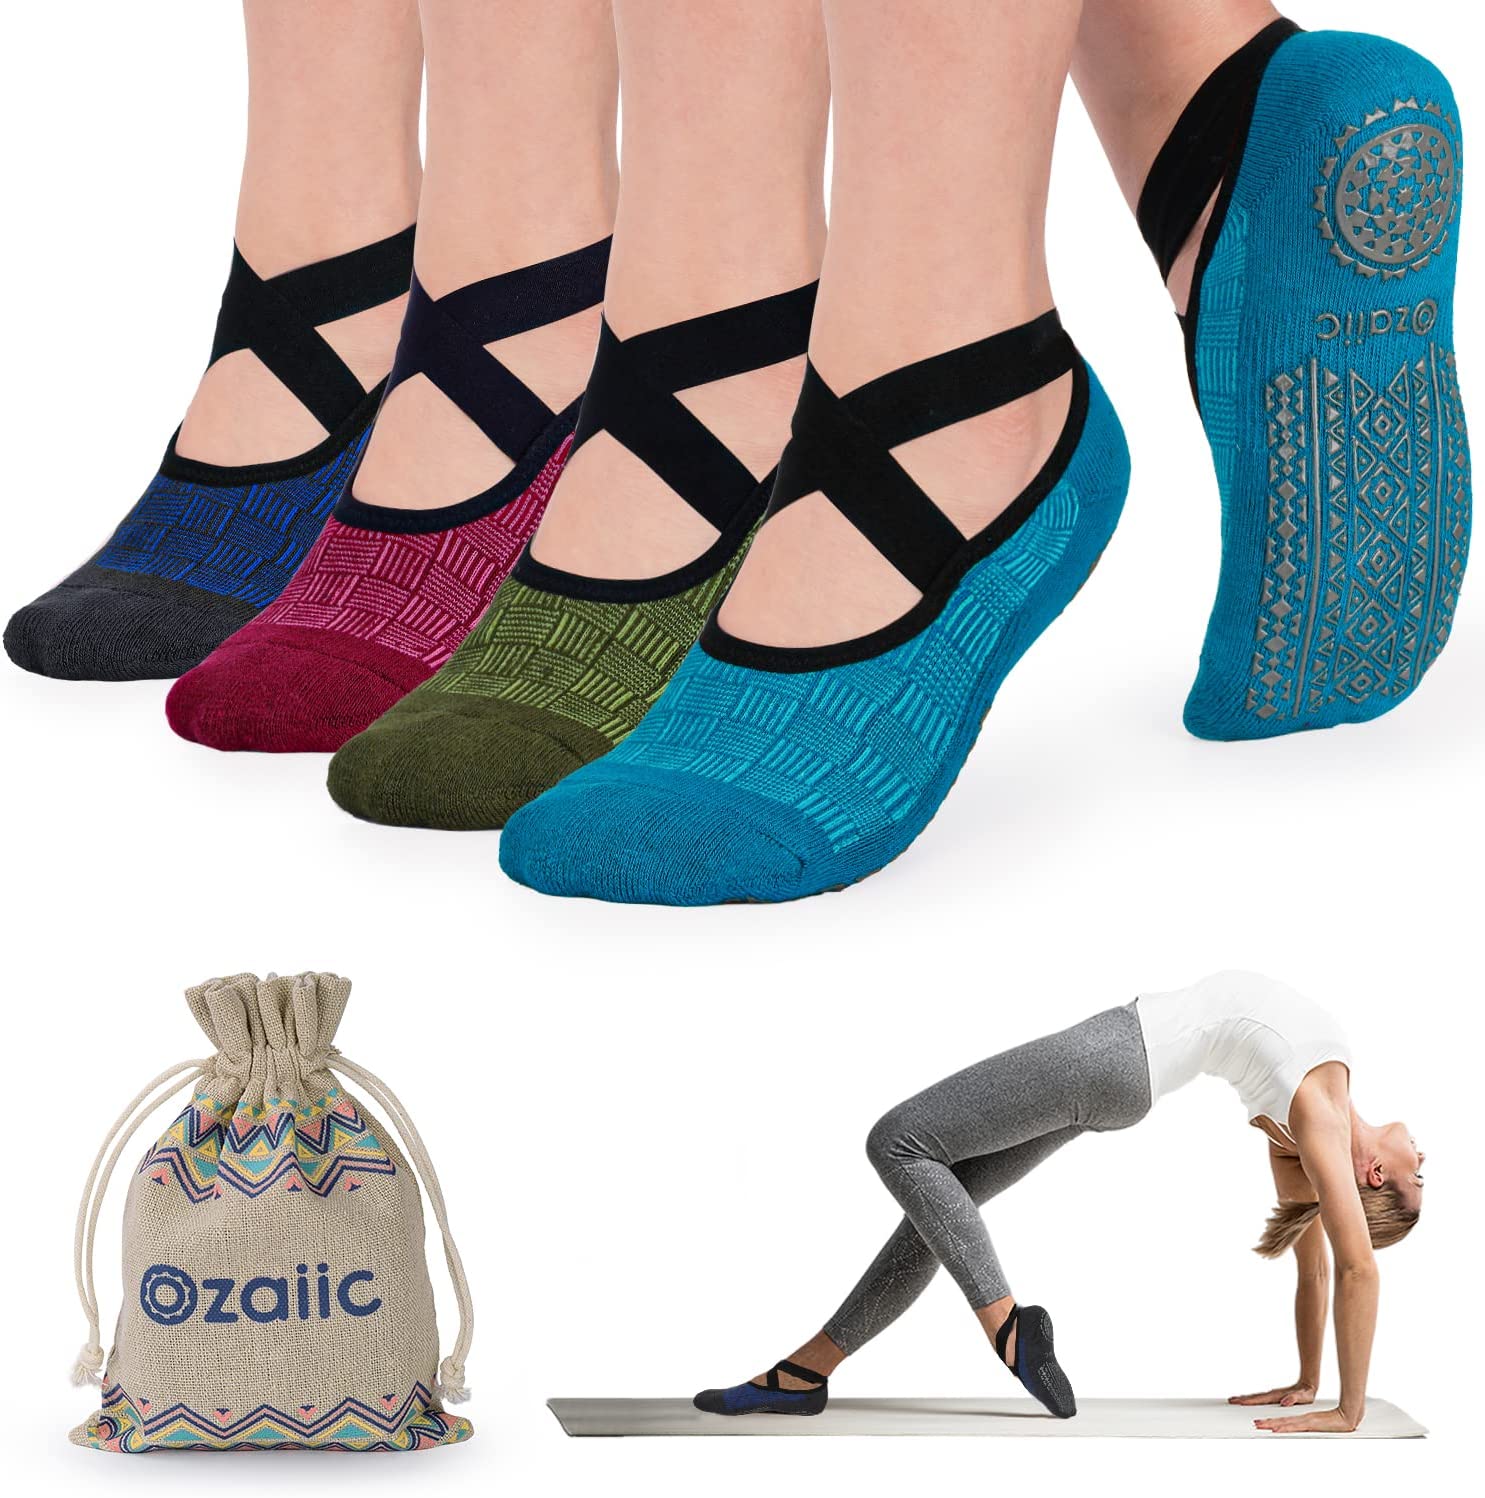  Ozaiic Yoga Socks For Women Non-Slip Grips & Straps, Ideal  For Pilates, Pure Barre, Ballet, Dance, Barefoot Workout